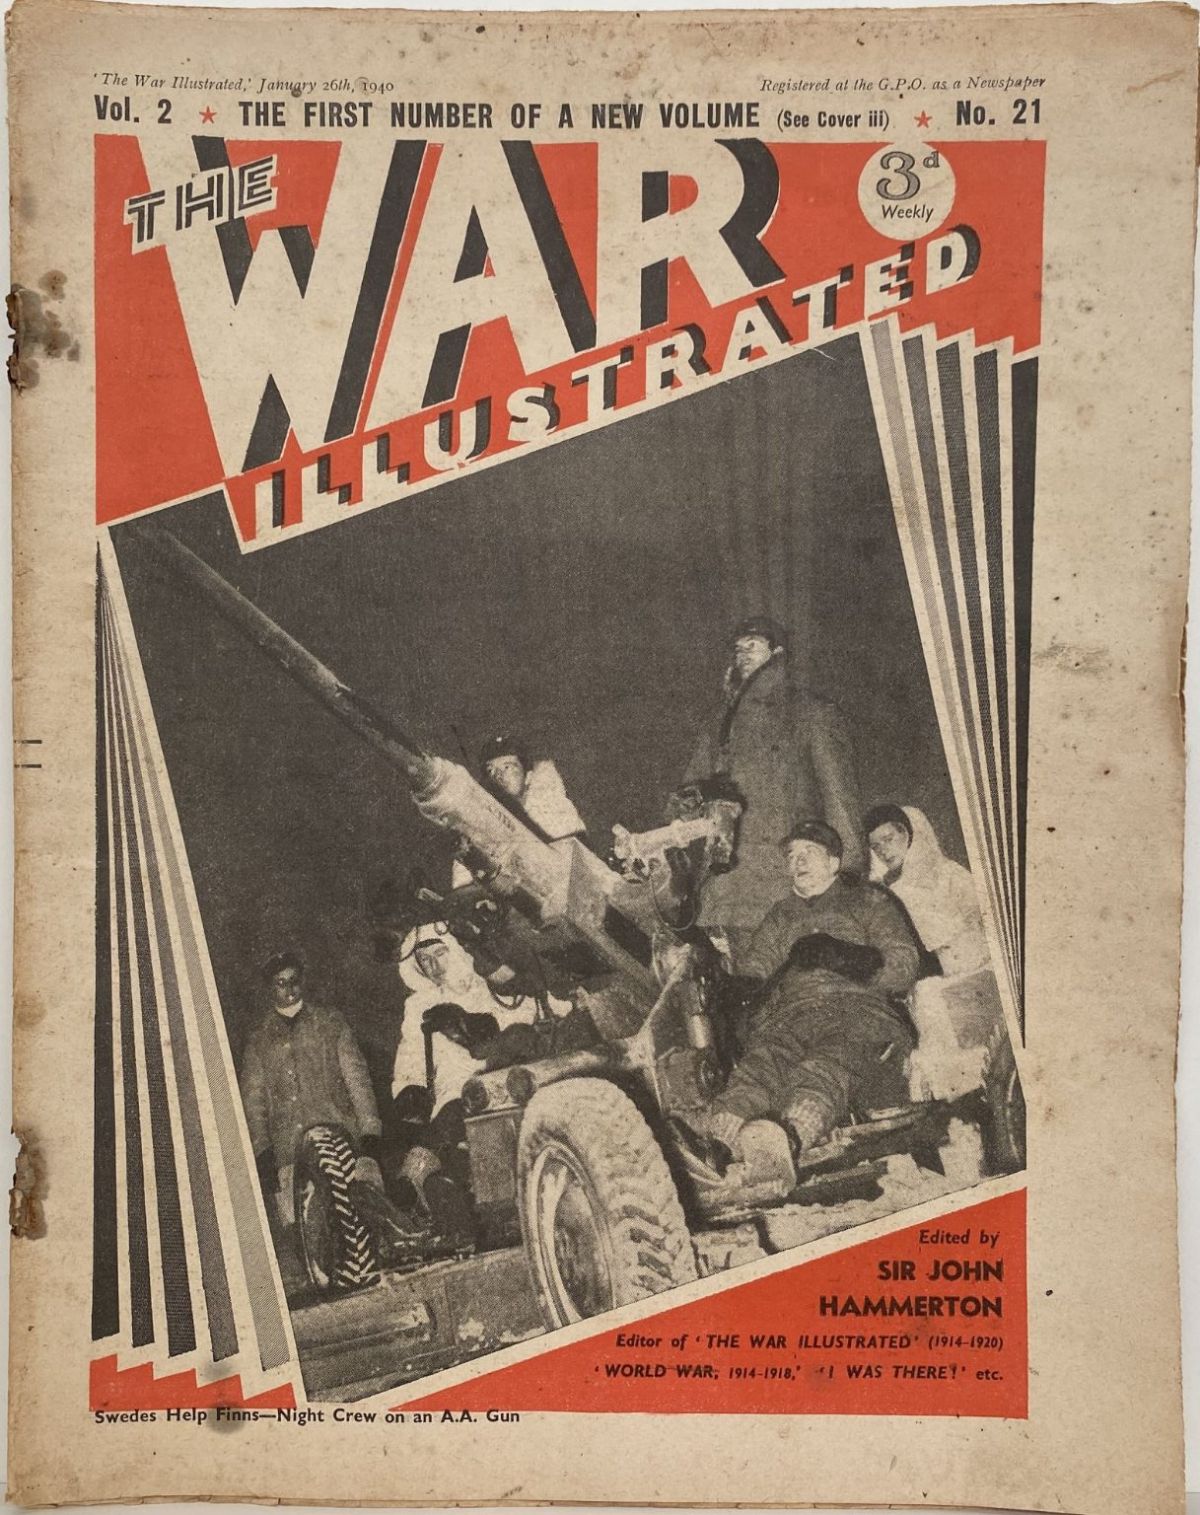 THE WAR ILLUSTRATED - Vol 2, No 21, 26th Jan 1940